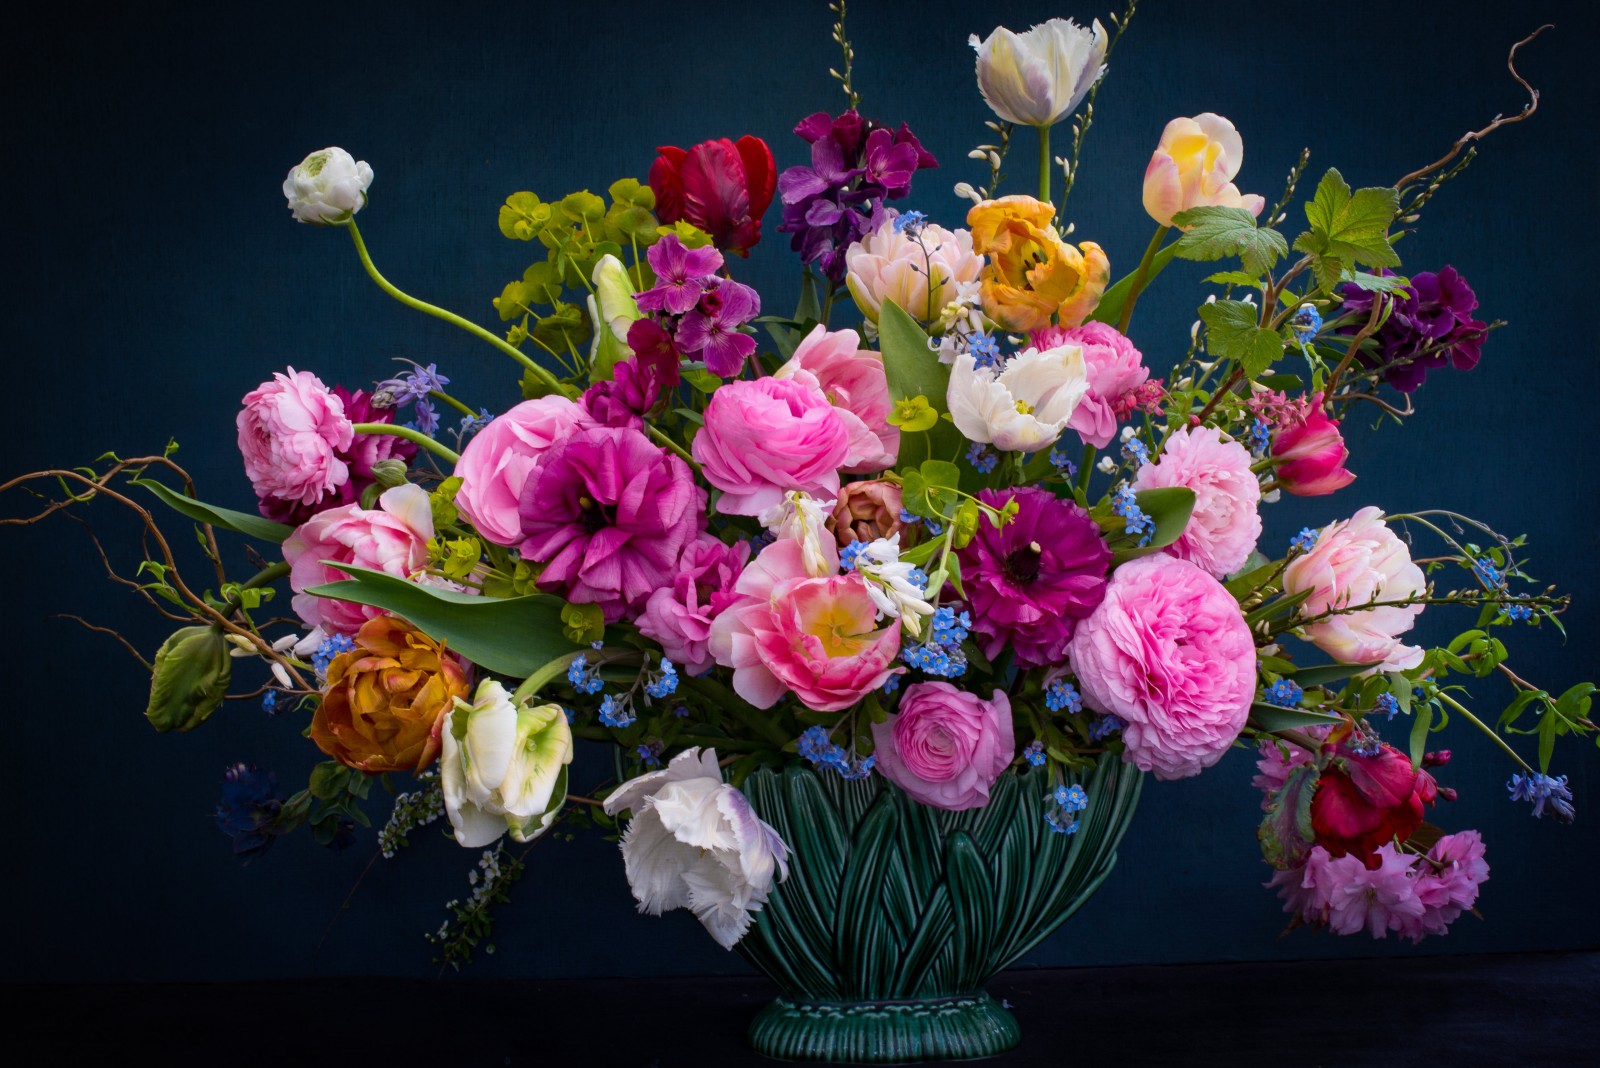 Latar Belakang, mawar, bunga-bunga, buket, tulip, vas, Ranunculus, Erysimum